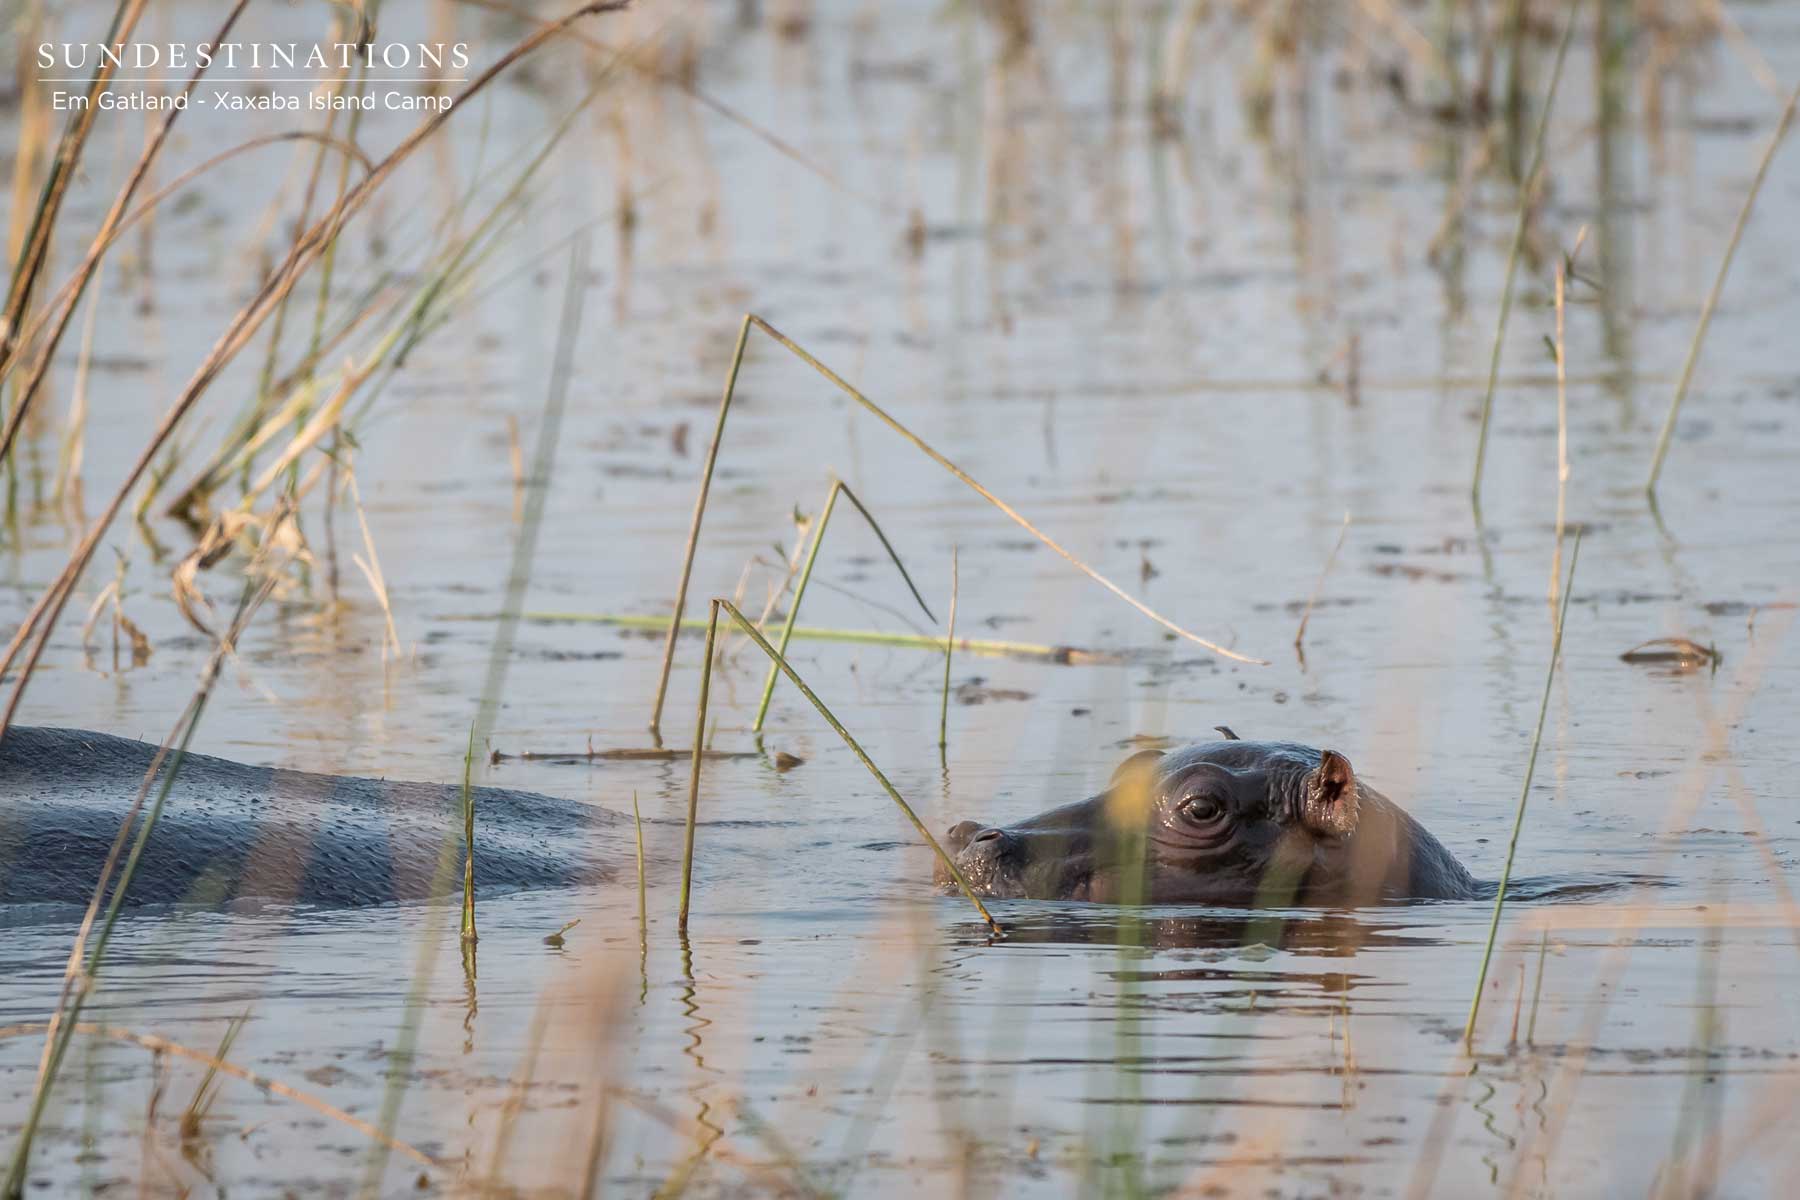 Okavango Delta Hippo